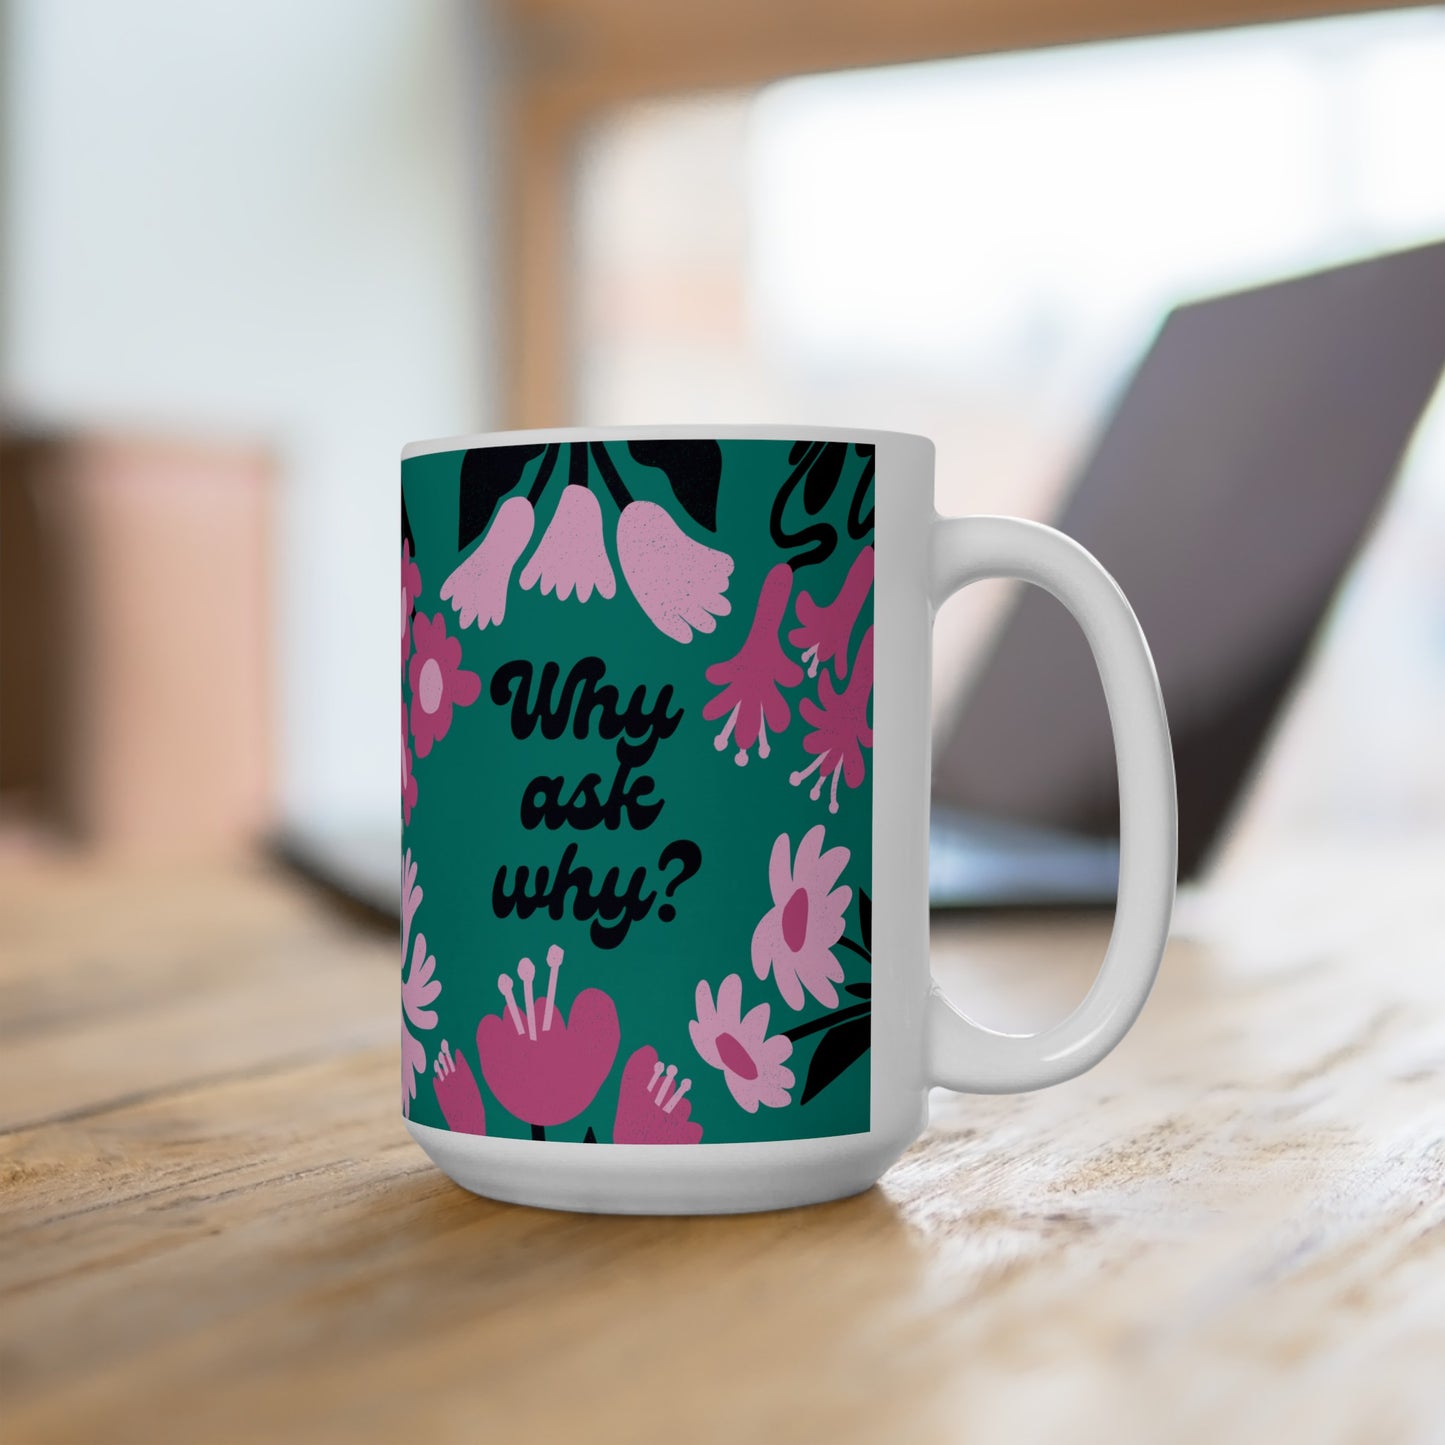 Retro Vibes "Why ask why?" Groovy Flowers Coffee Mug 15oz